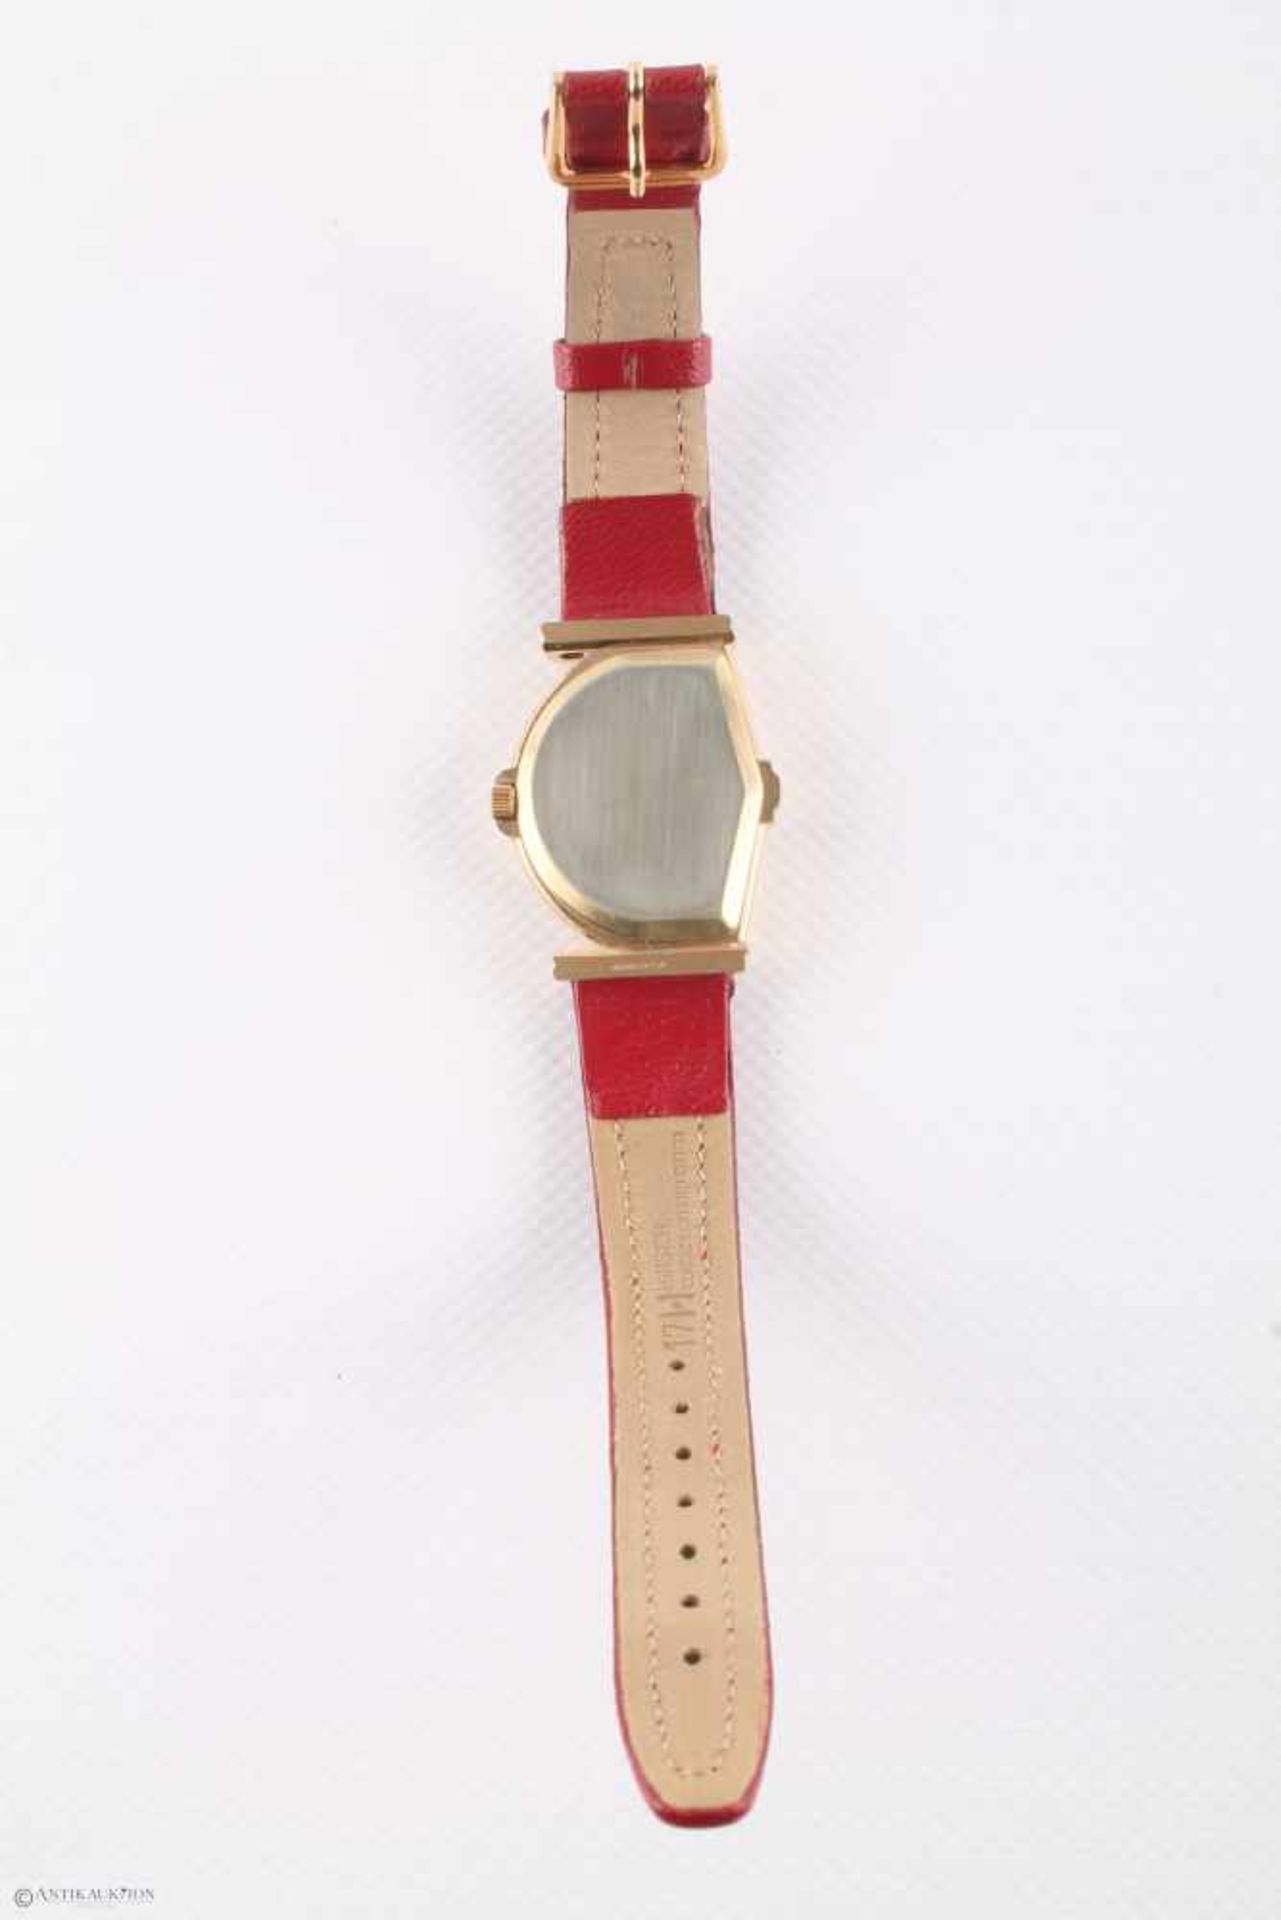 Jean d'Eve Sectora Armbanduhr, wristwatch, - Image 6 of 8